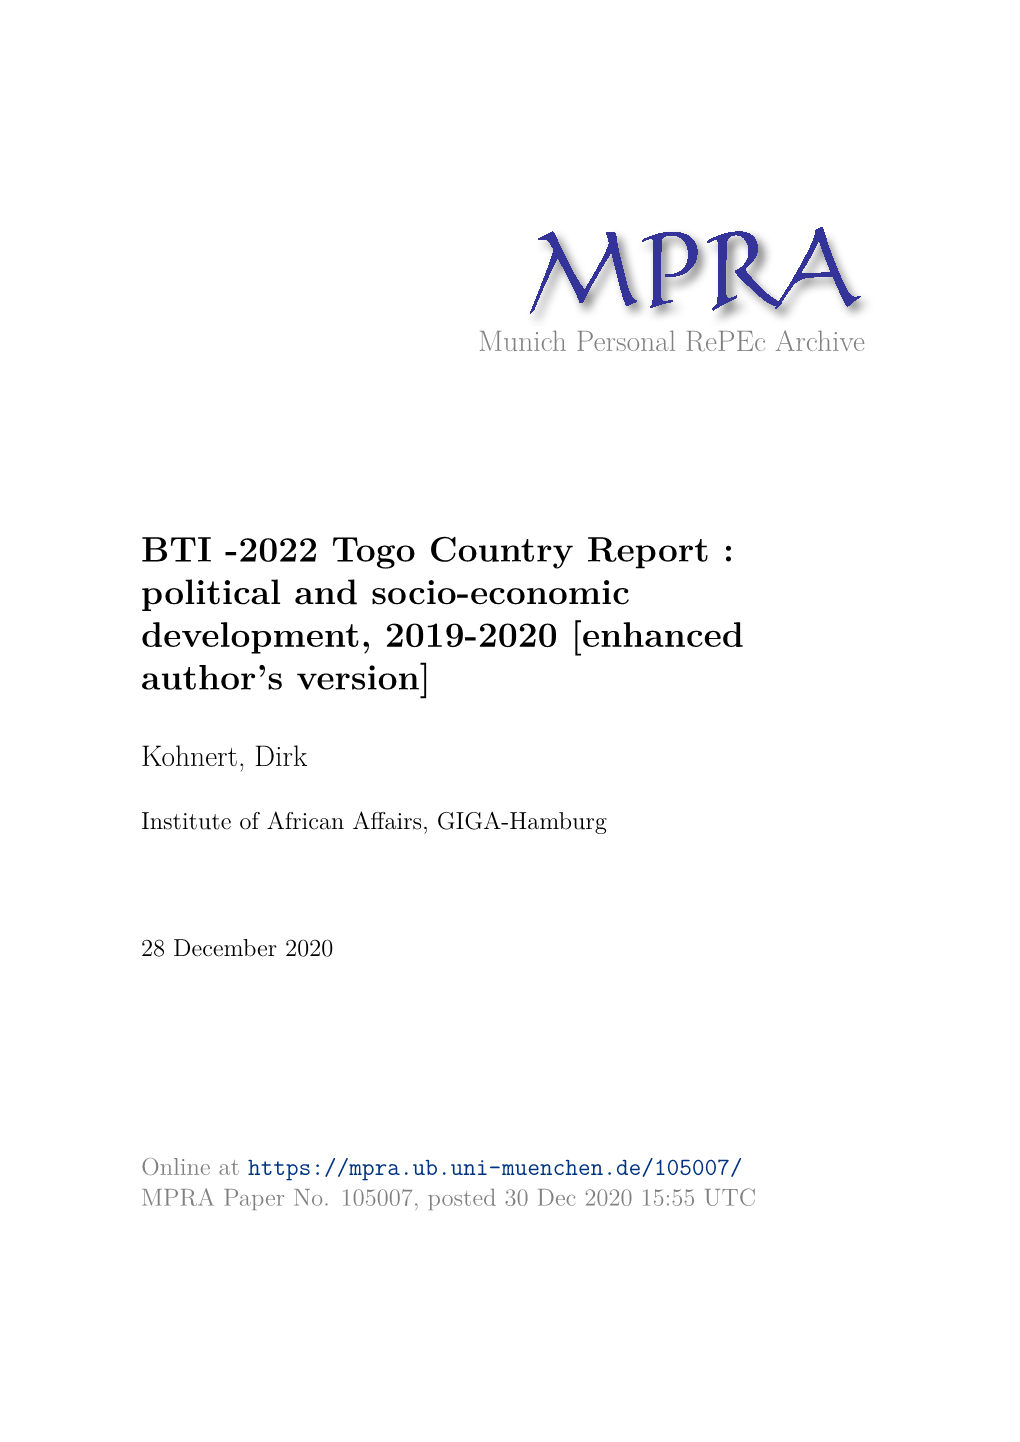 BTI -2022 Togo Country Report : Political and Socio-Economic Development, 2019-2020 [Enhanced Author’S Version]